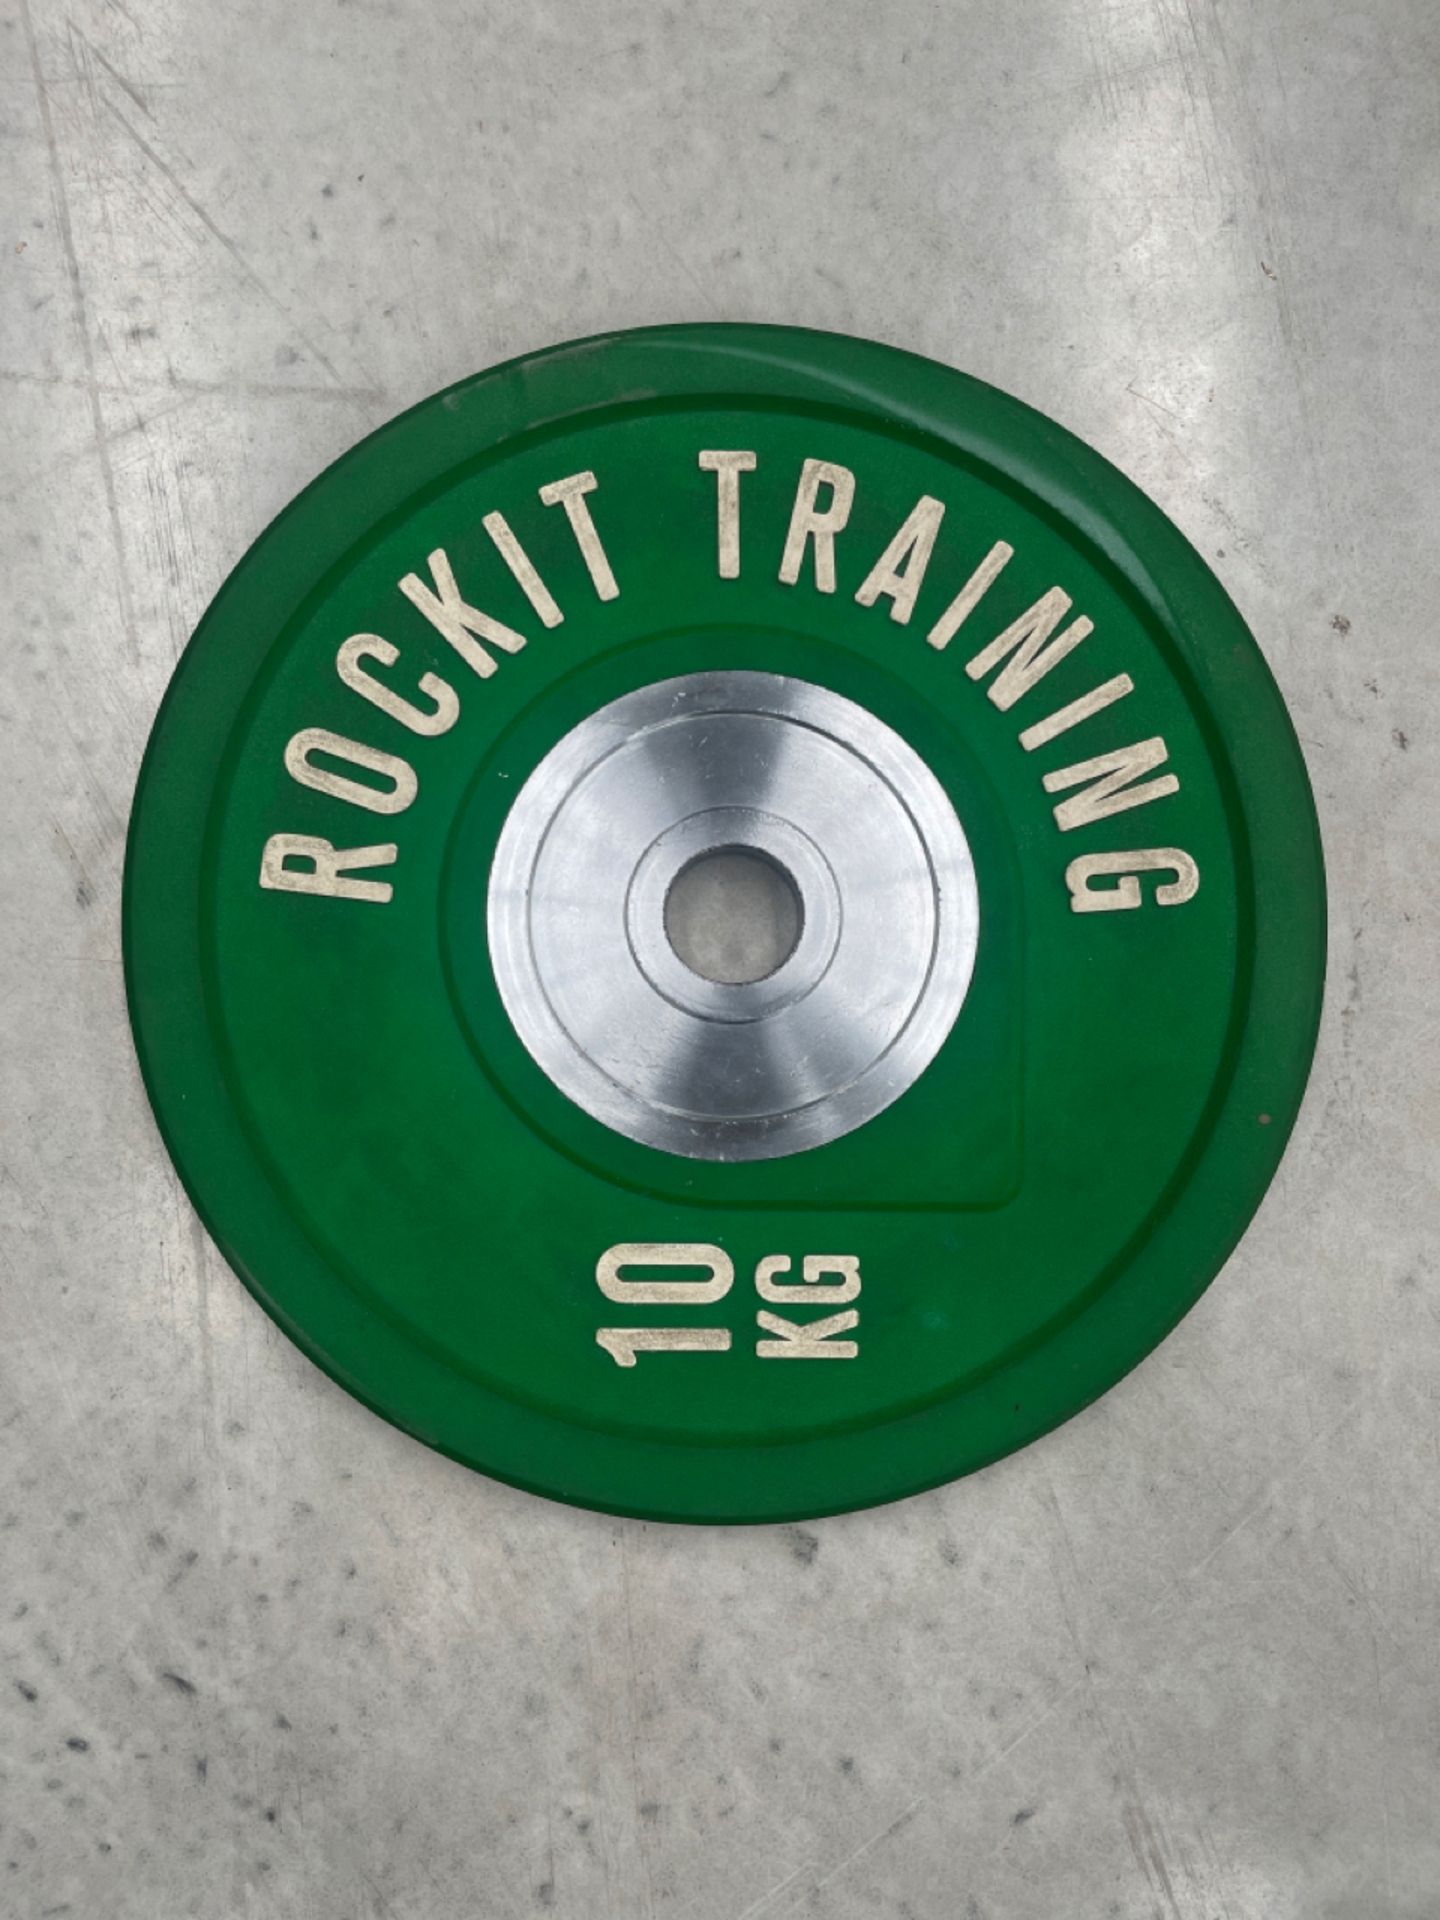 Rockit Training 10kg Bumper Plates x 2 - Image 2 of 2